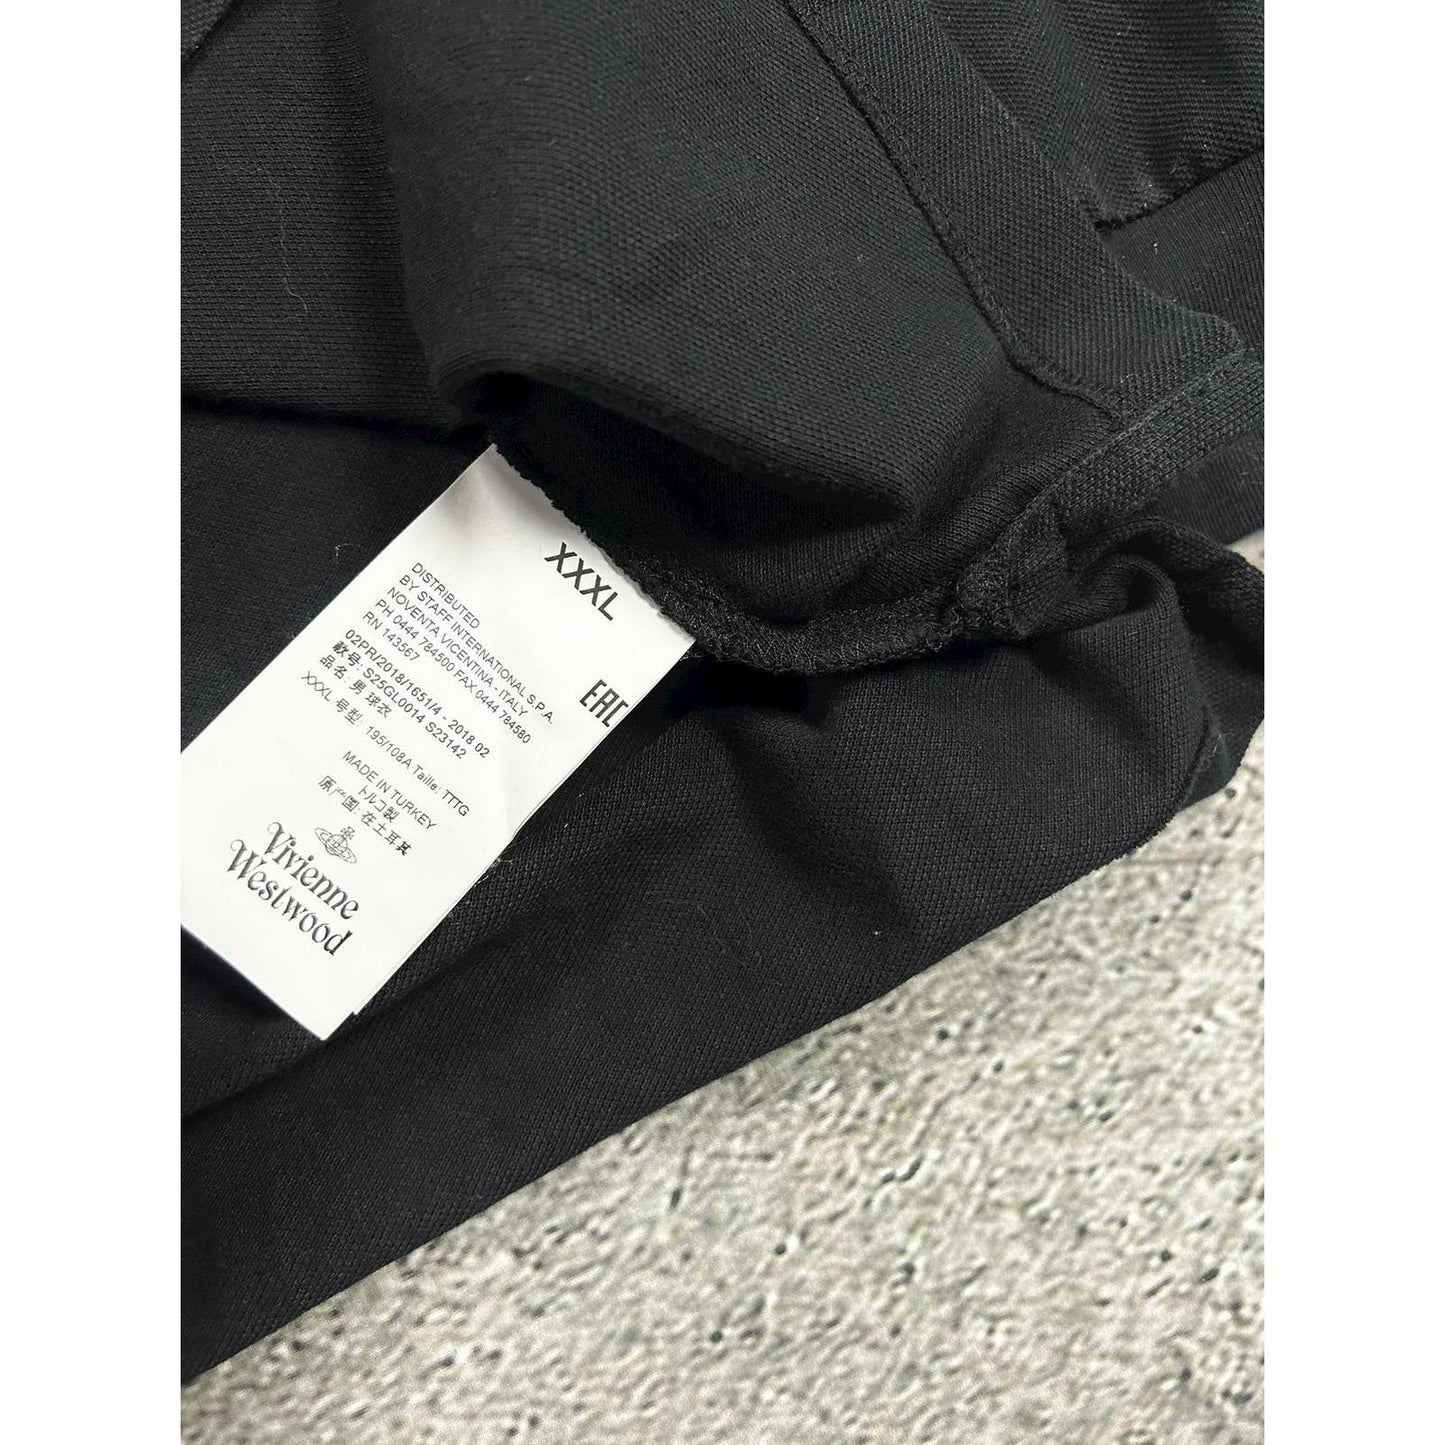 Vivienne Westwood longsleeve polo t-shirt black small logo